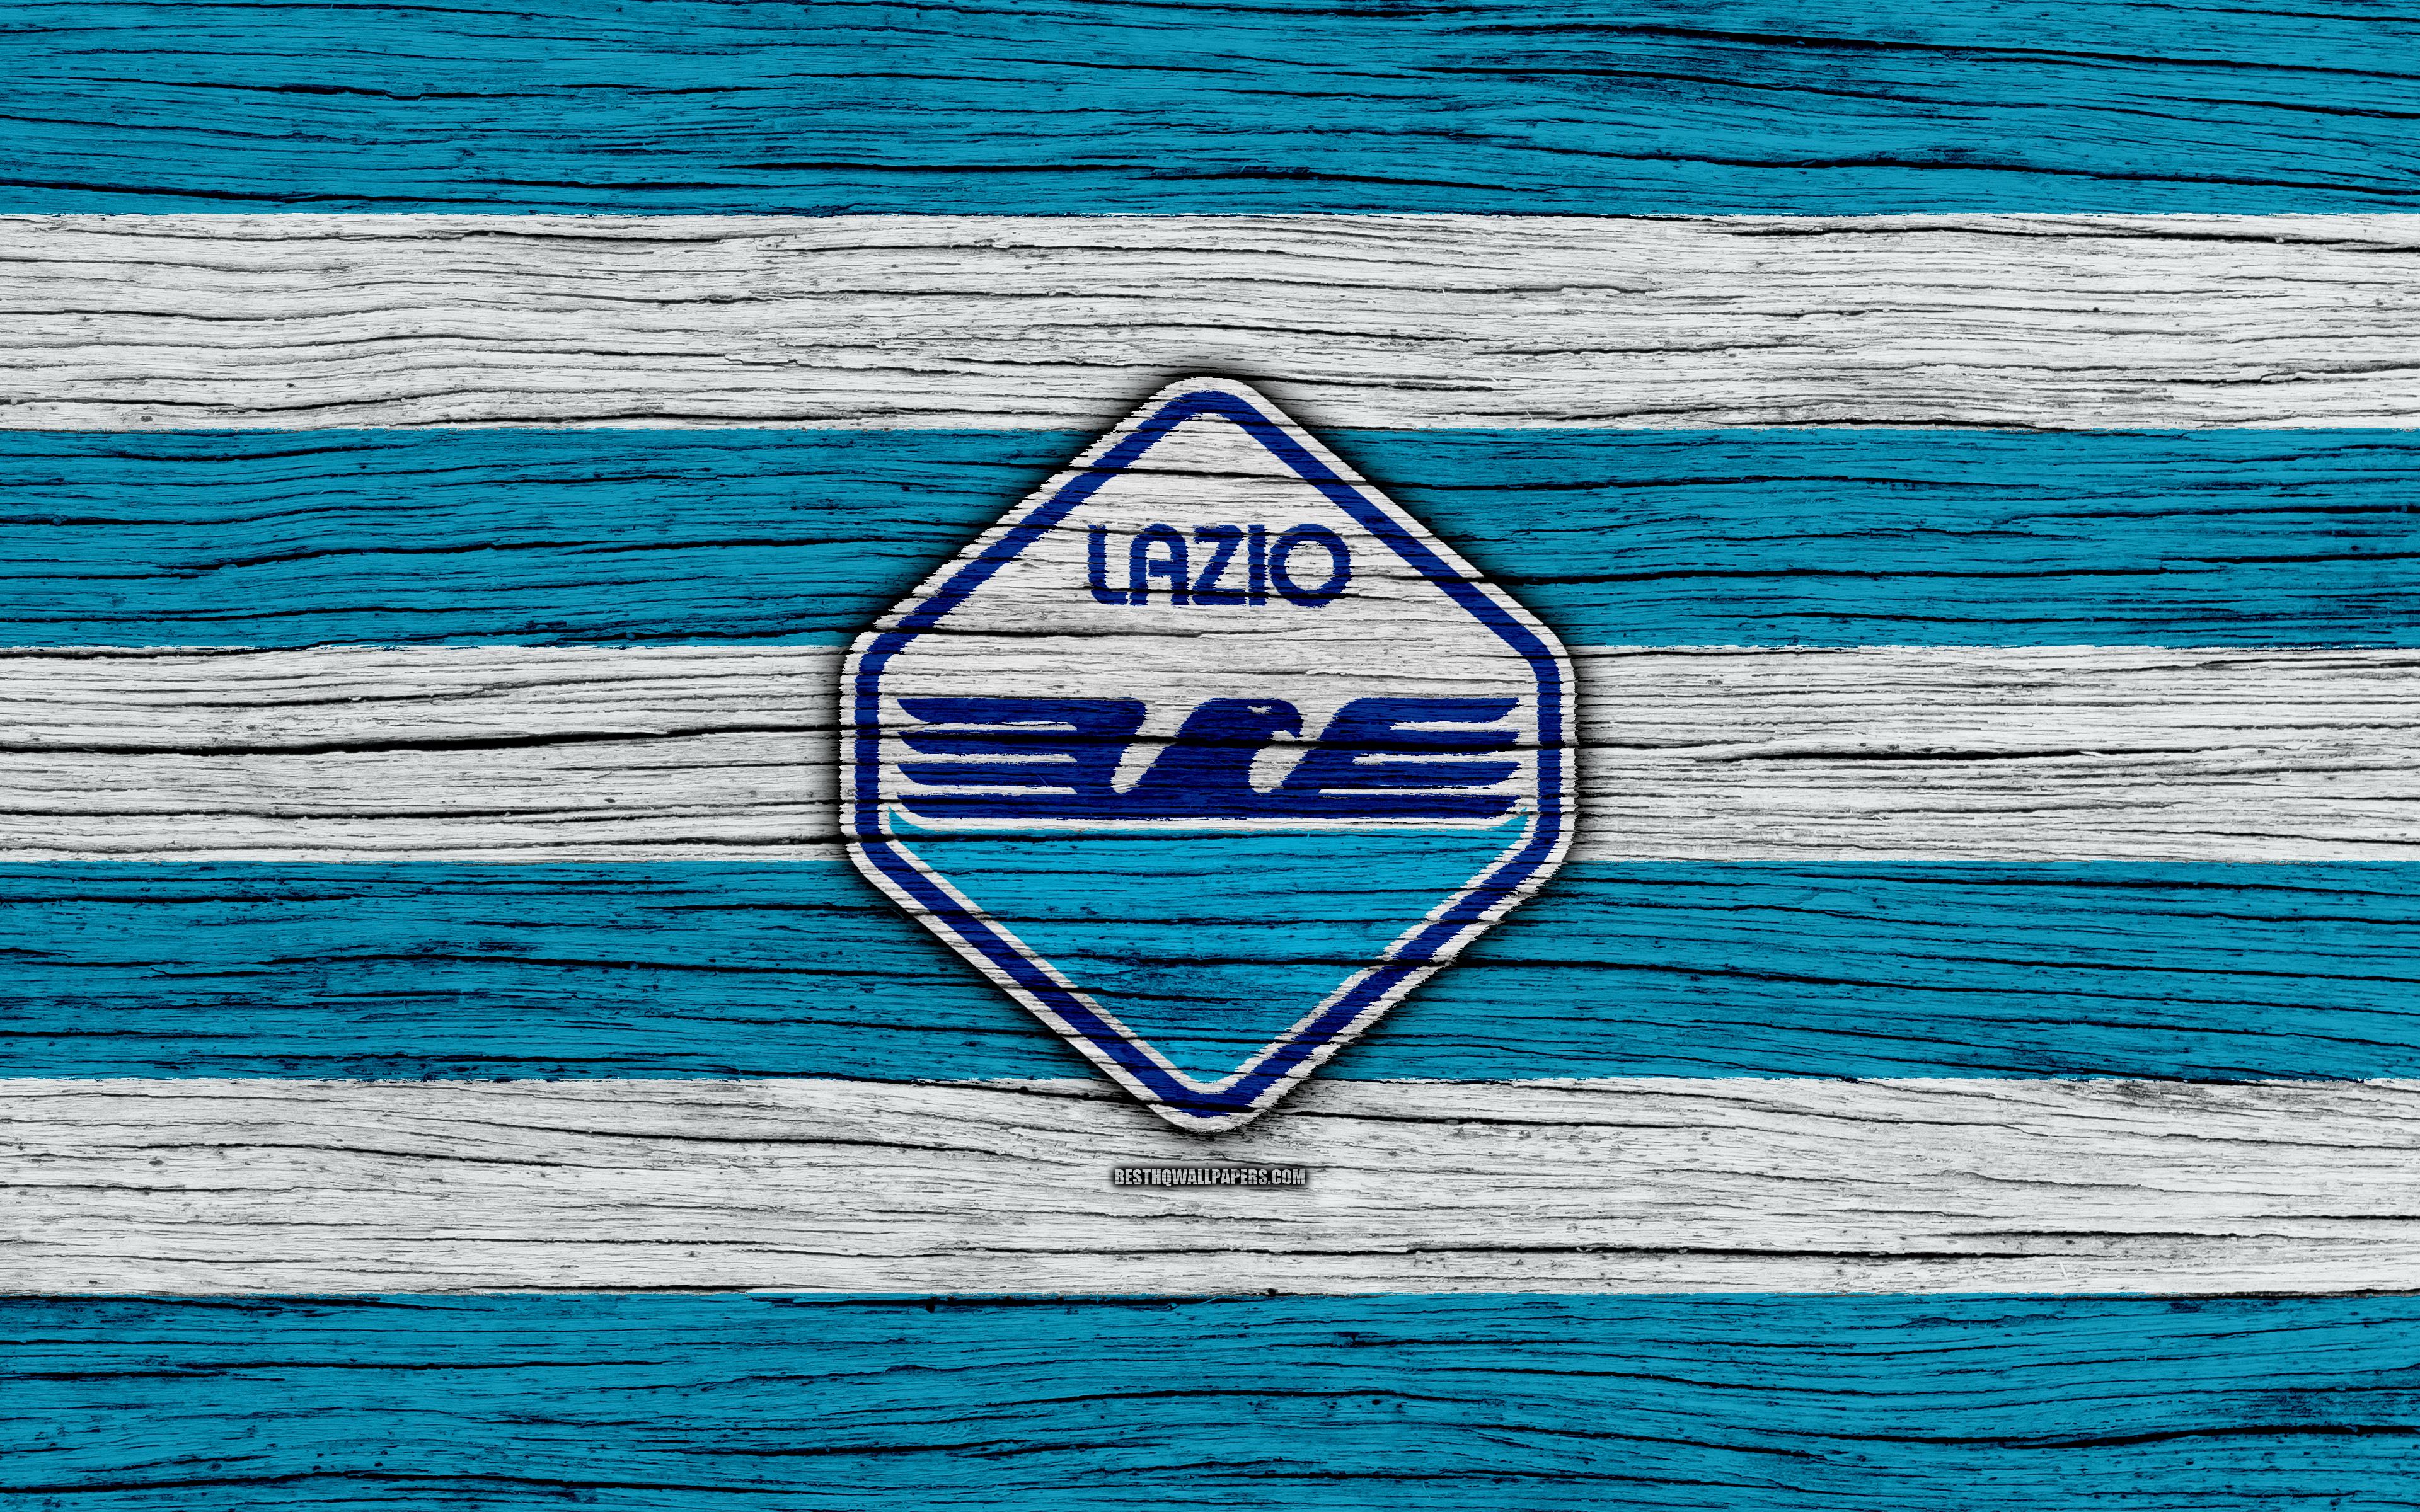 Download wallpaper Lazio, 4k, Serie A, new logo, Italy, wooden